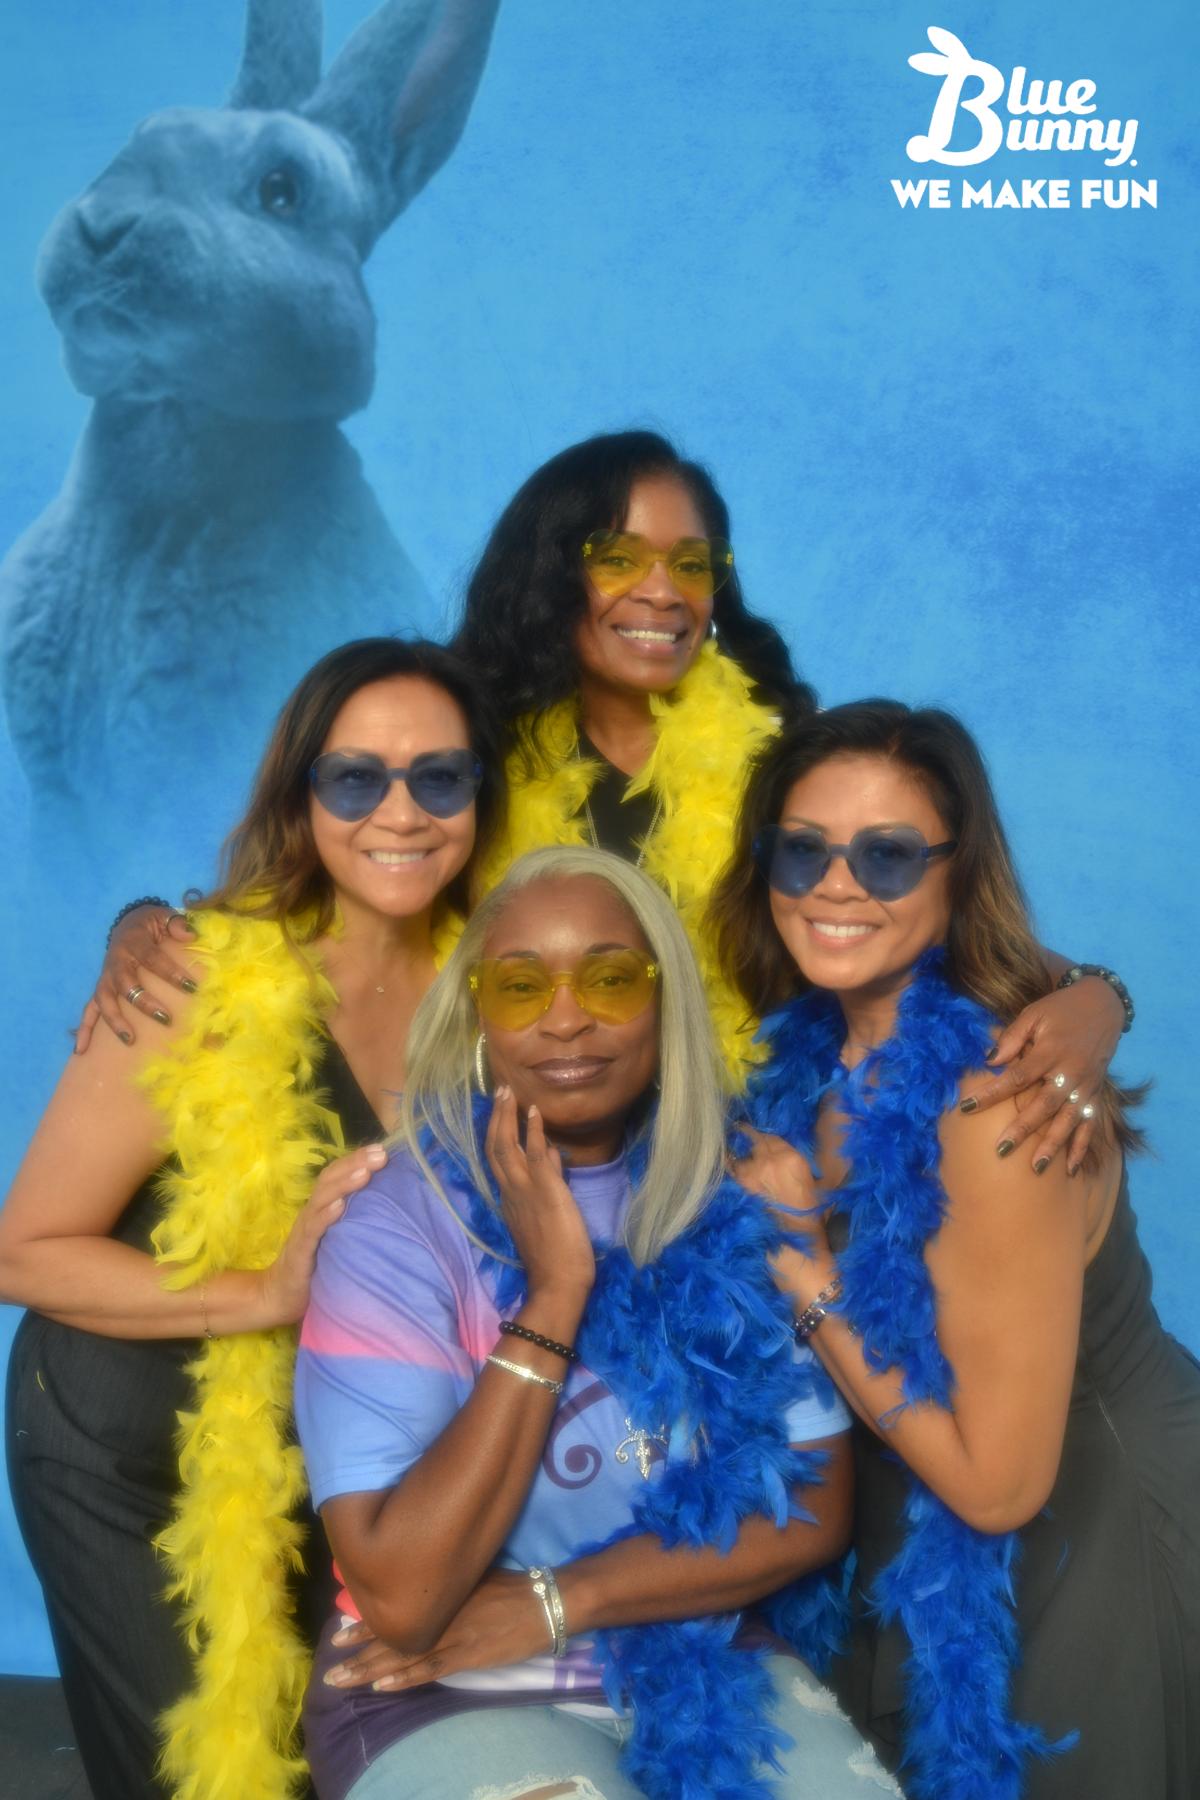 Four women in boas and sunglasses